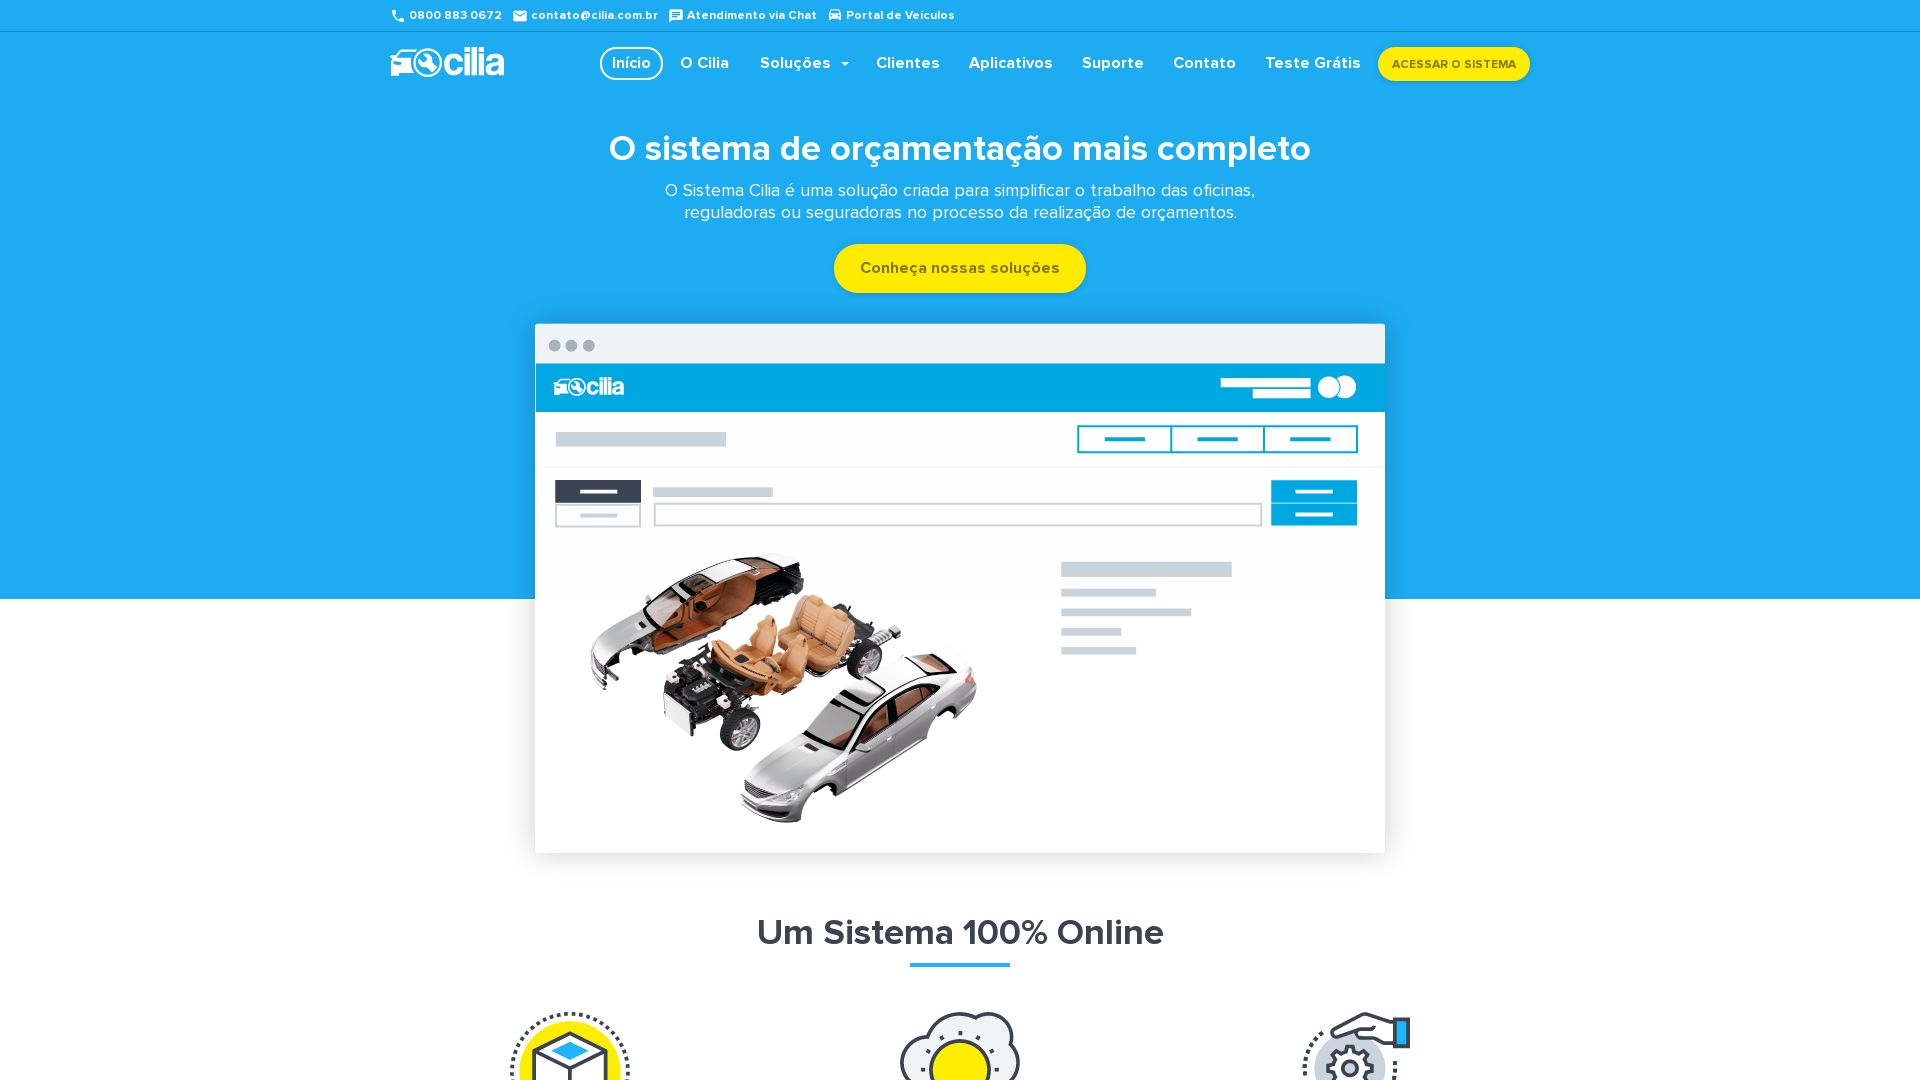 Website status cilia.com is   ONLINE